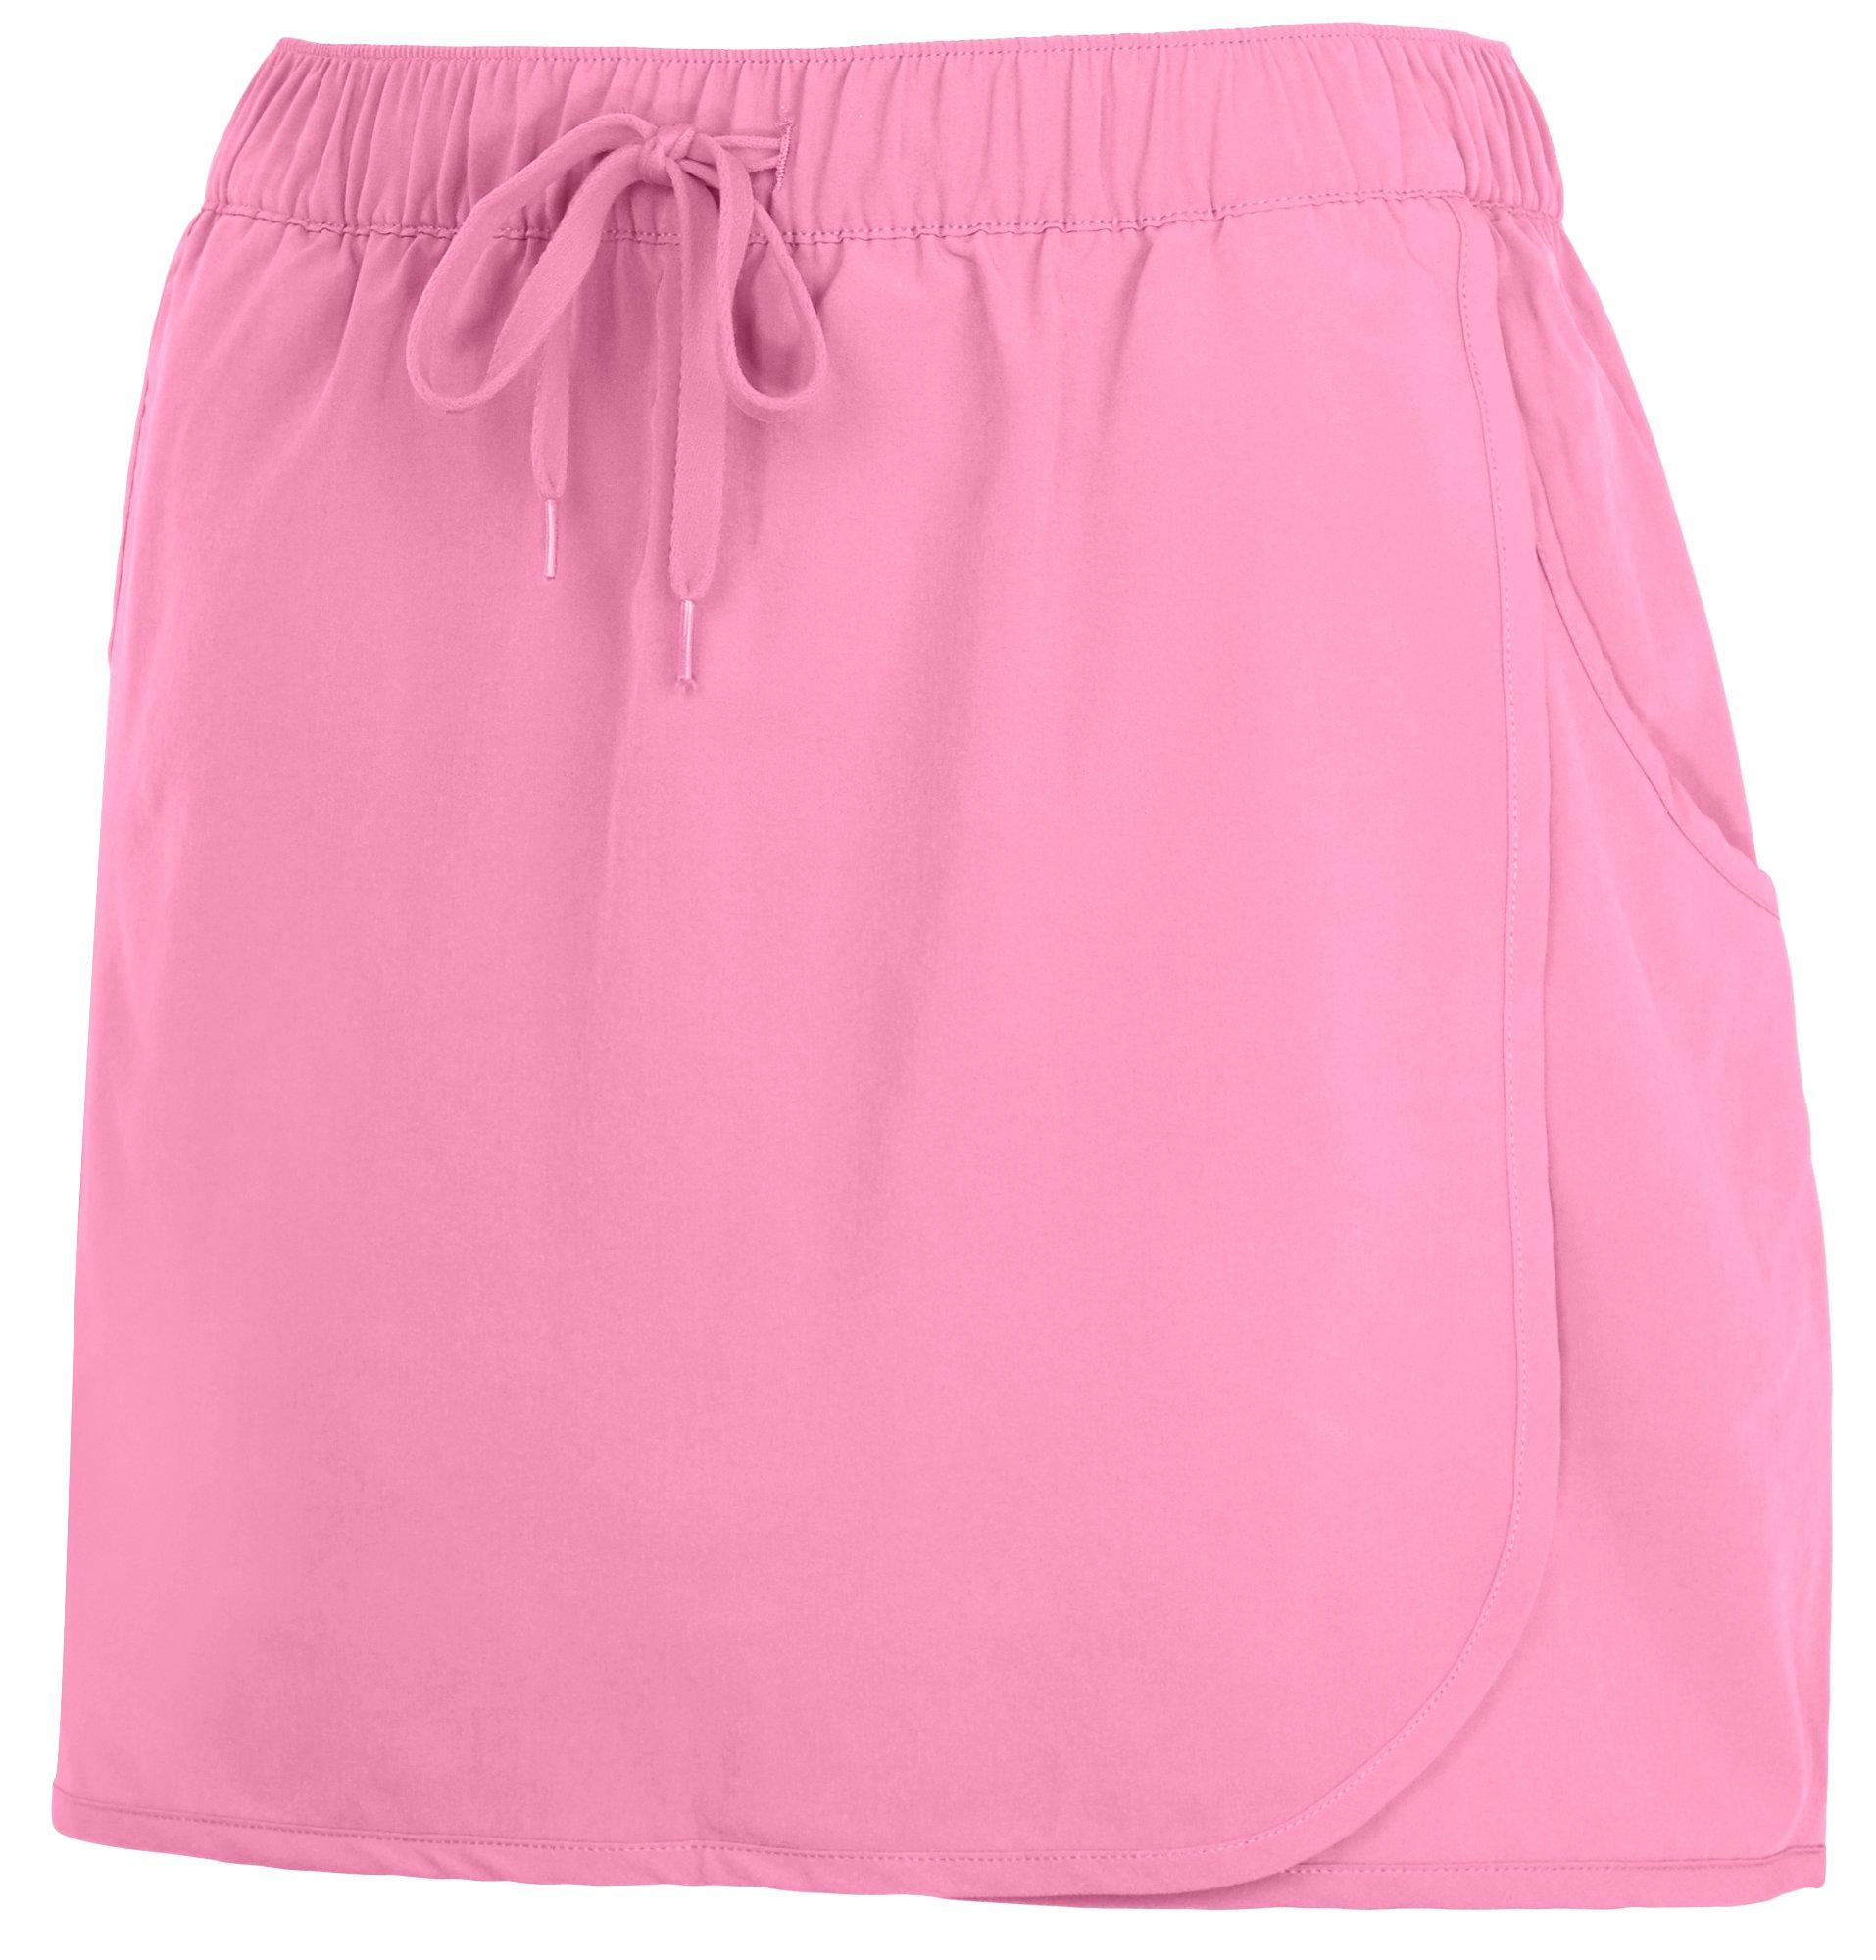 Plus Size Skorts & Skirts for Women | Bealls Florida